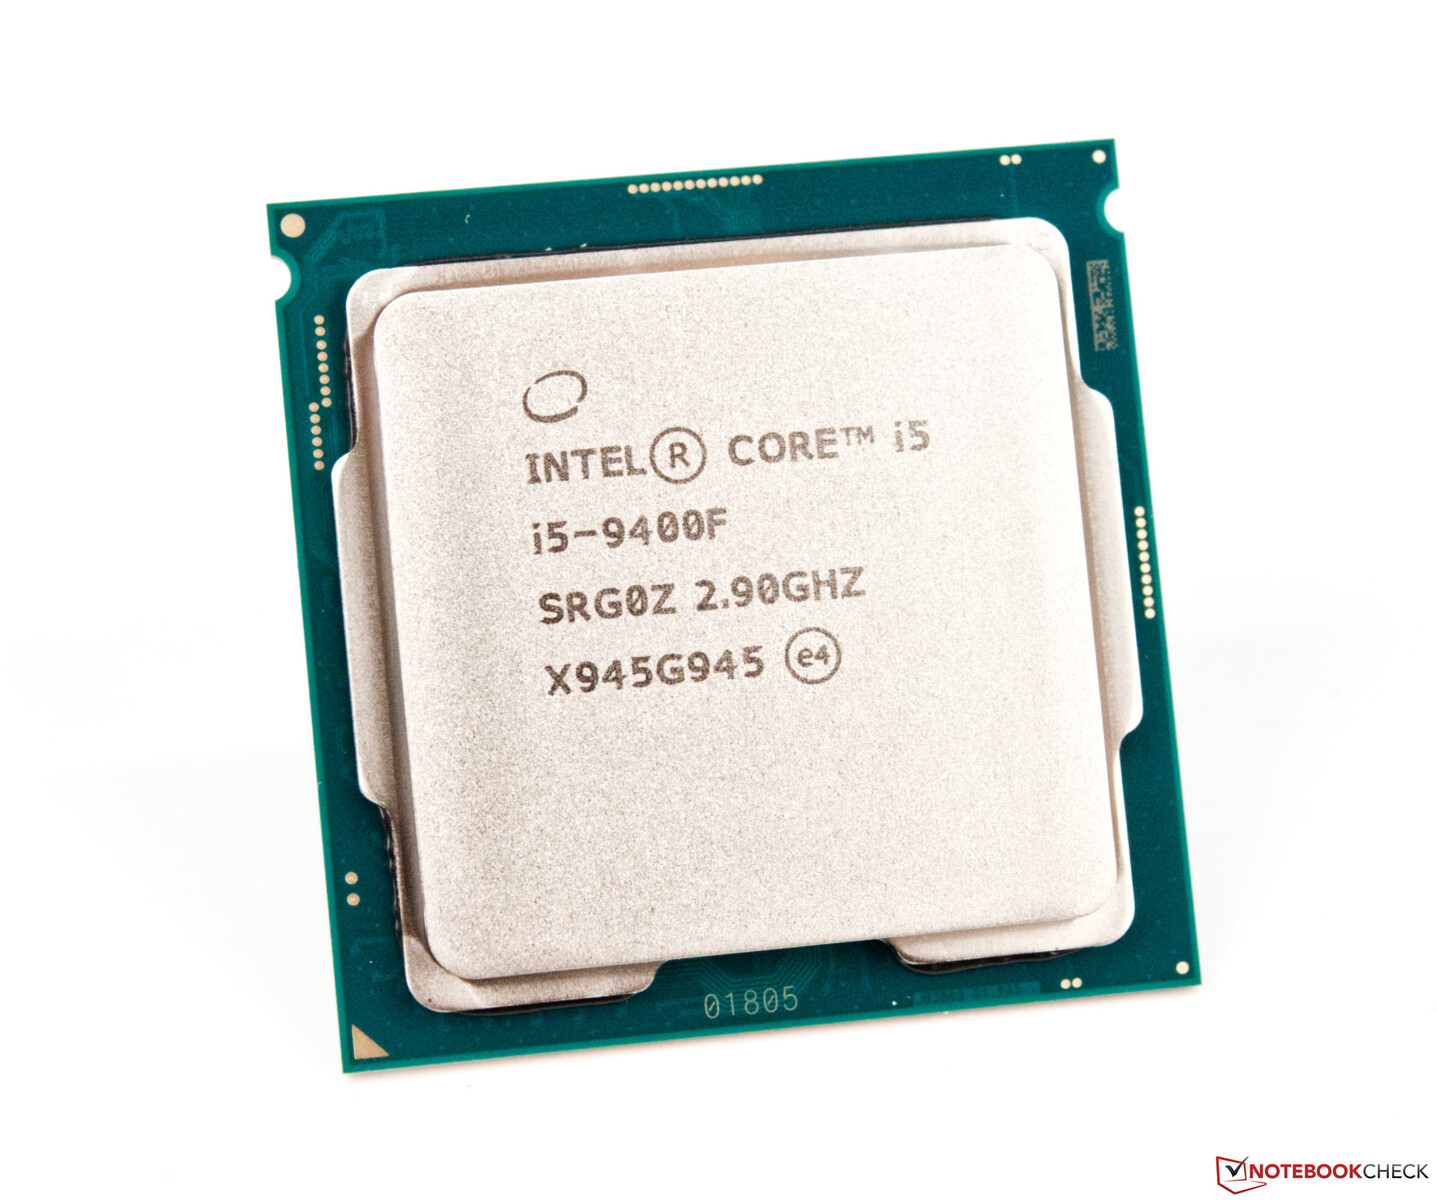 Intel Core I5 9400f Vs Intel Core I5 8400